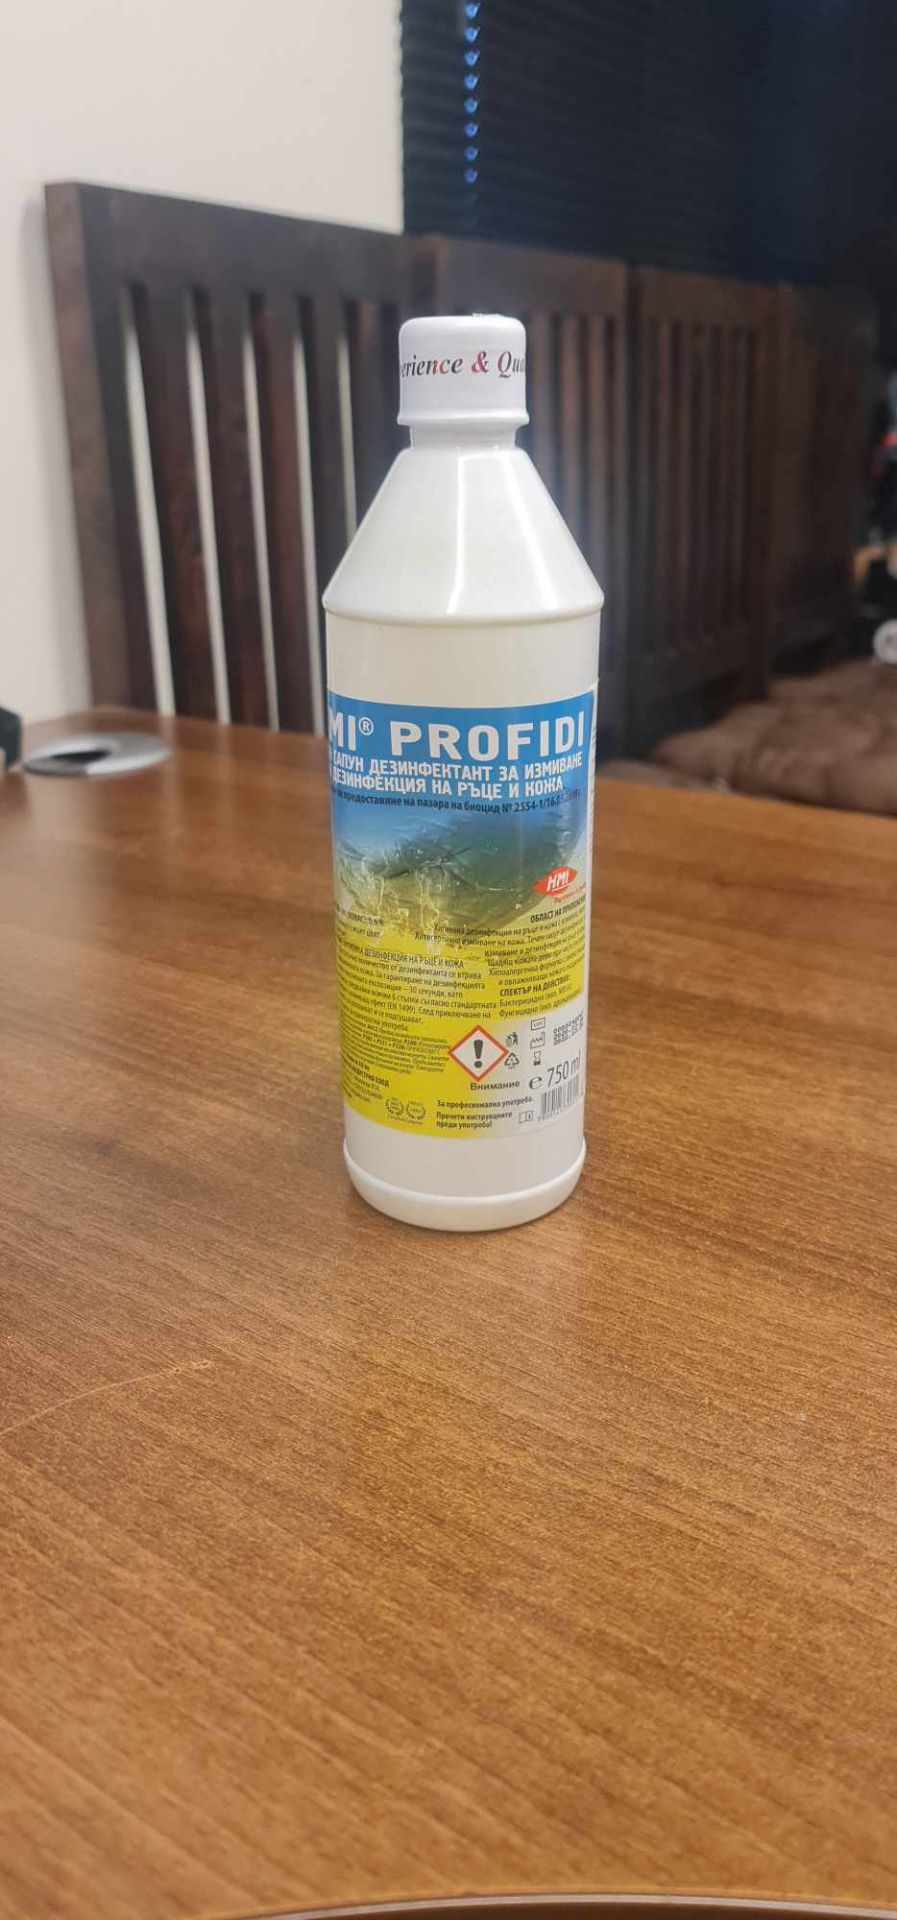 50 x Profidi Liquid Soap Disinfectant For Hands and Skin